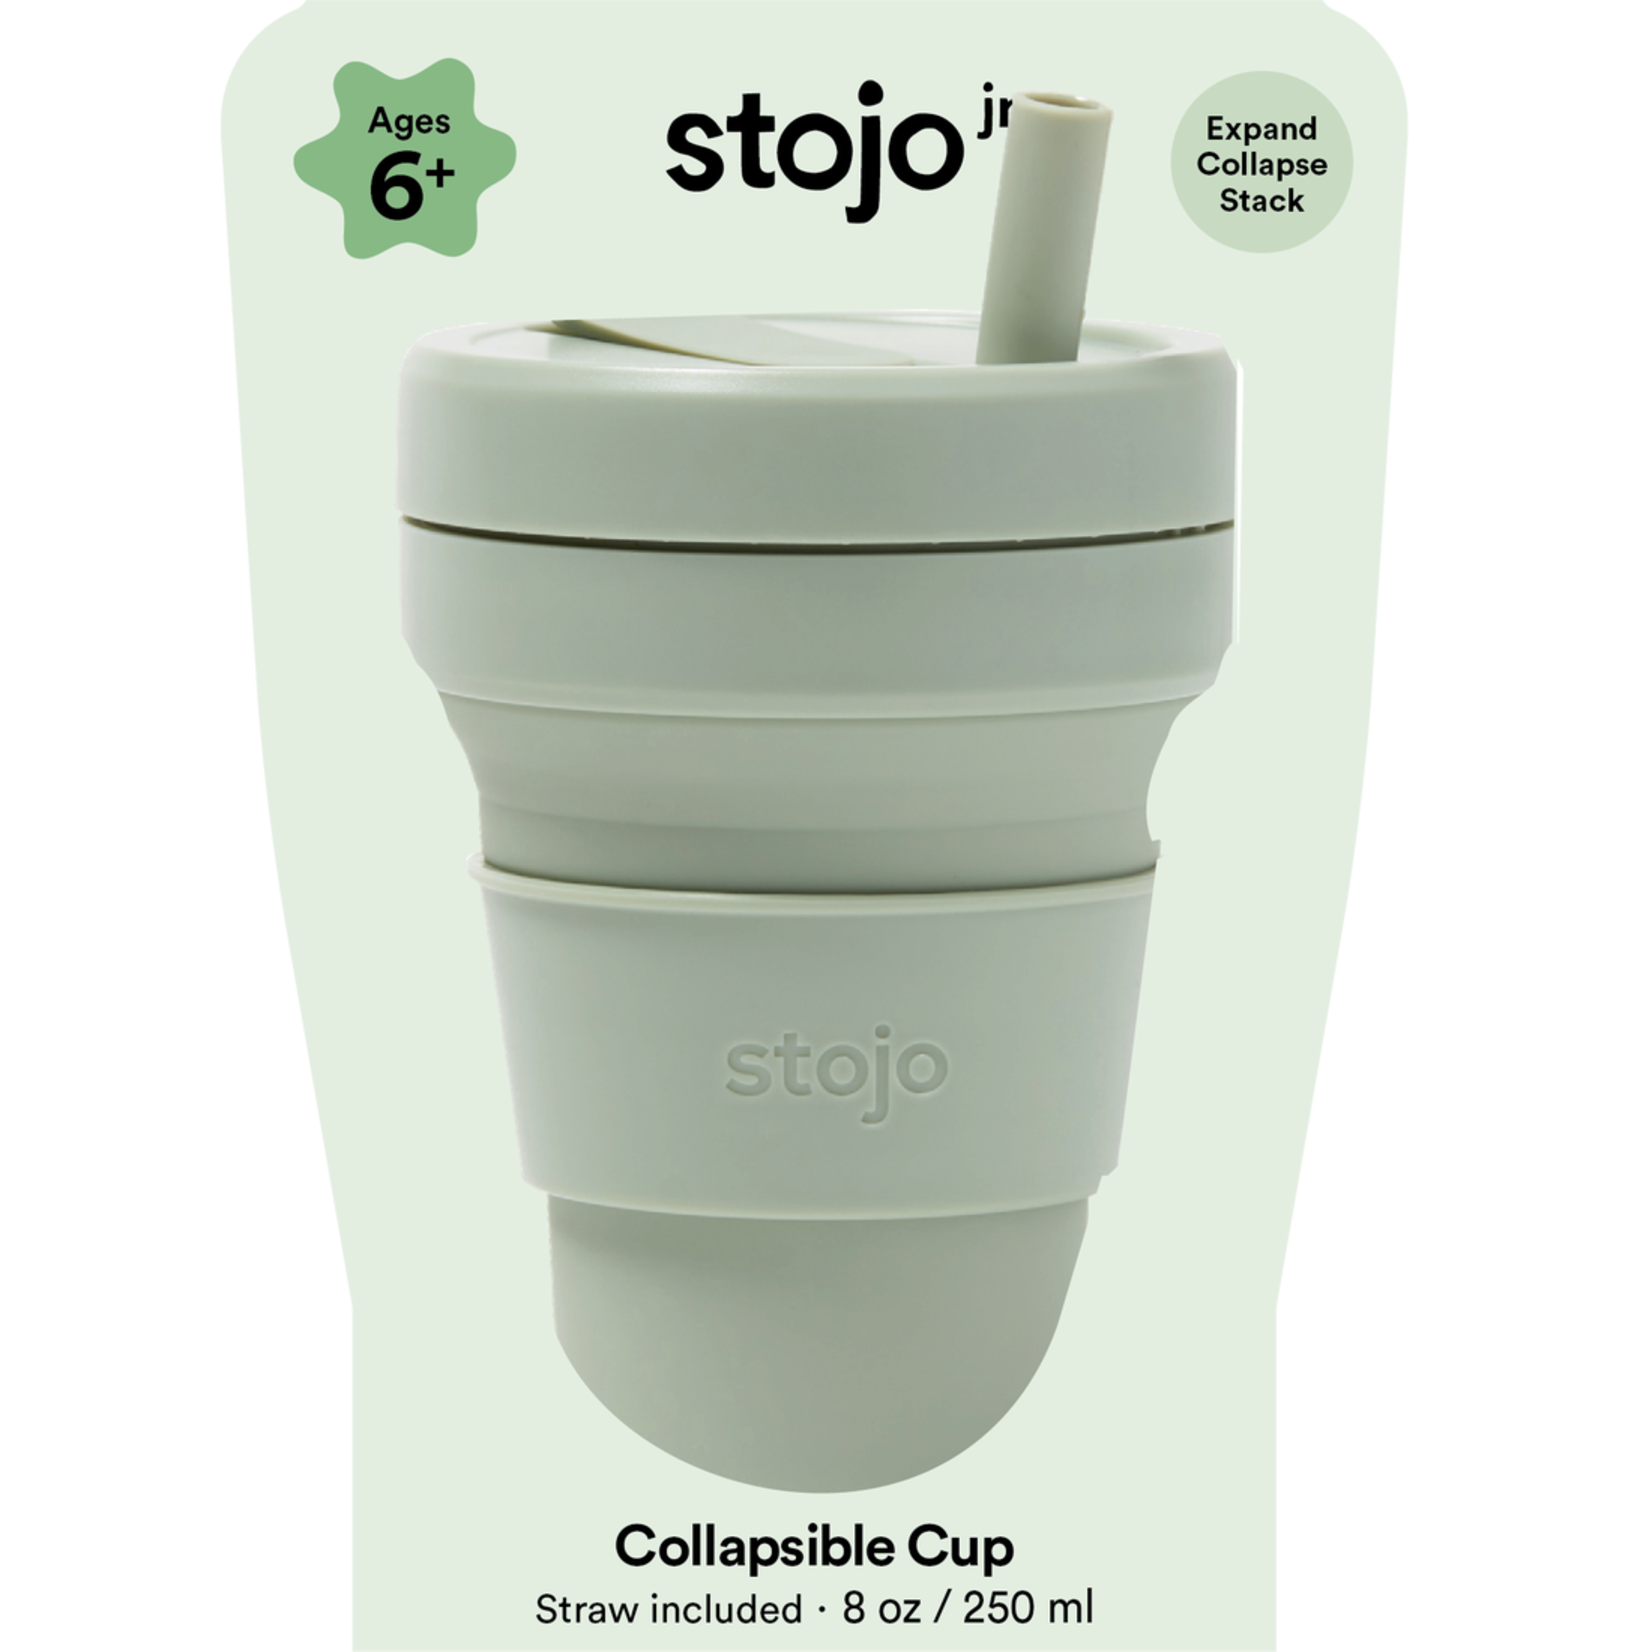 stojo 8 oz collapsible cup - sage green